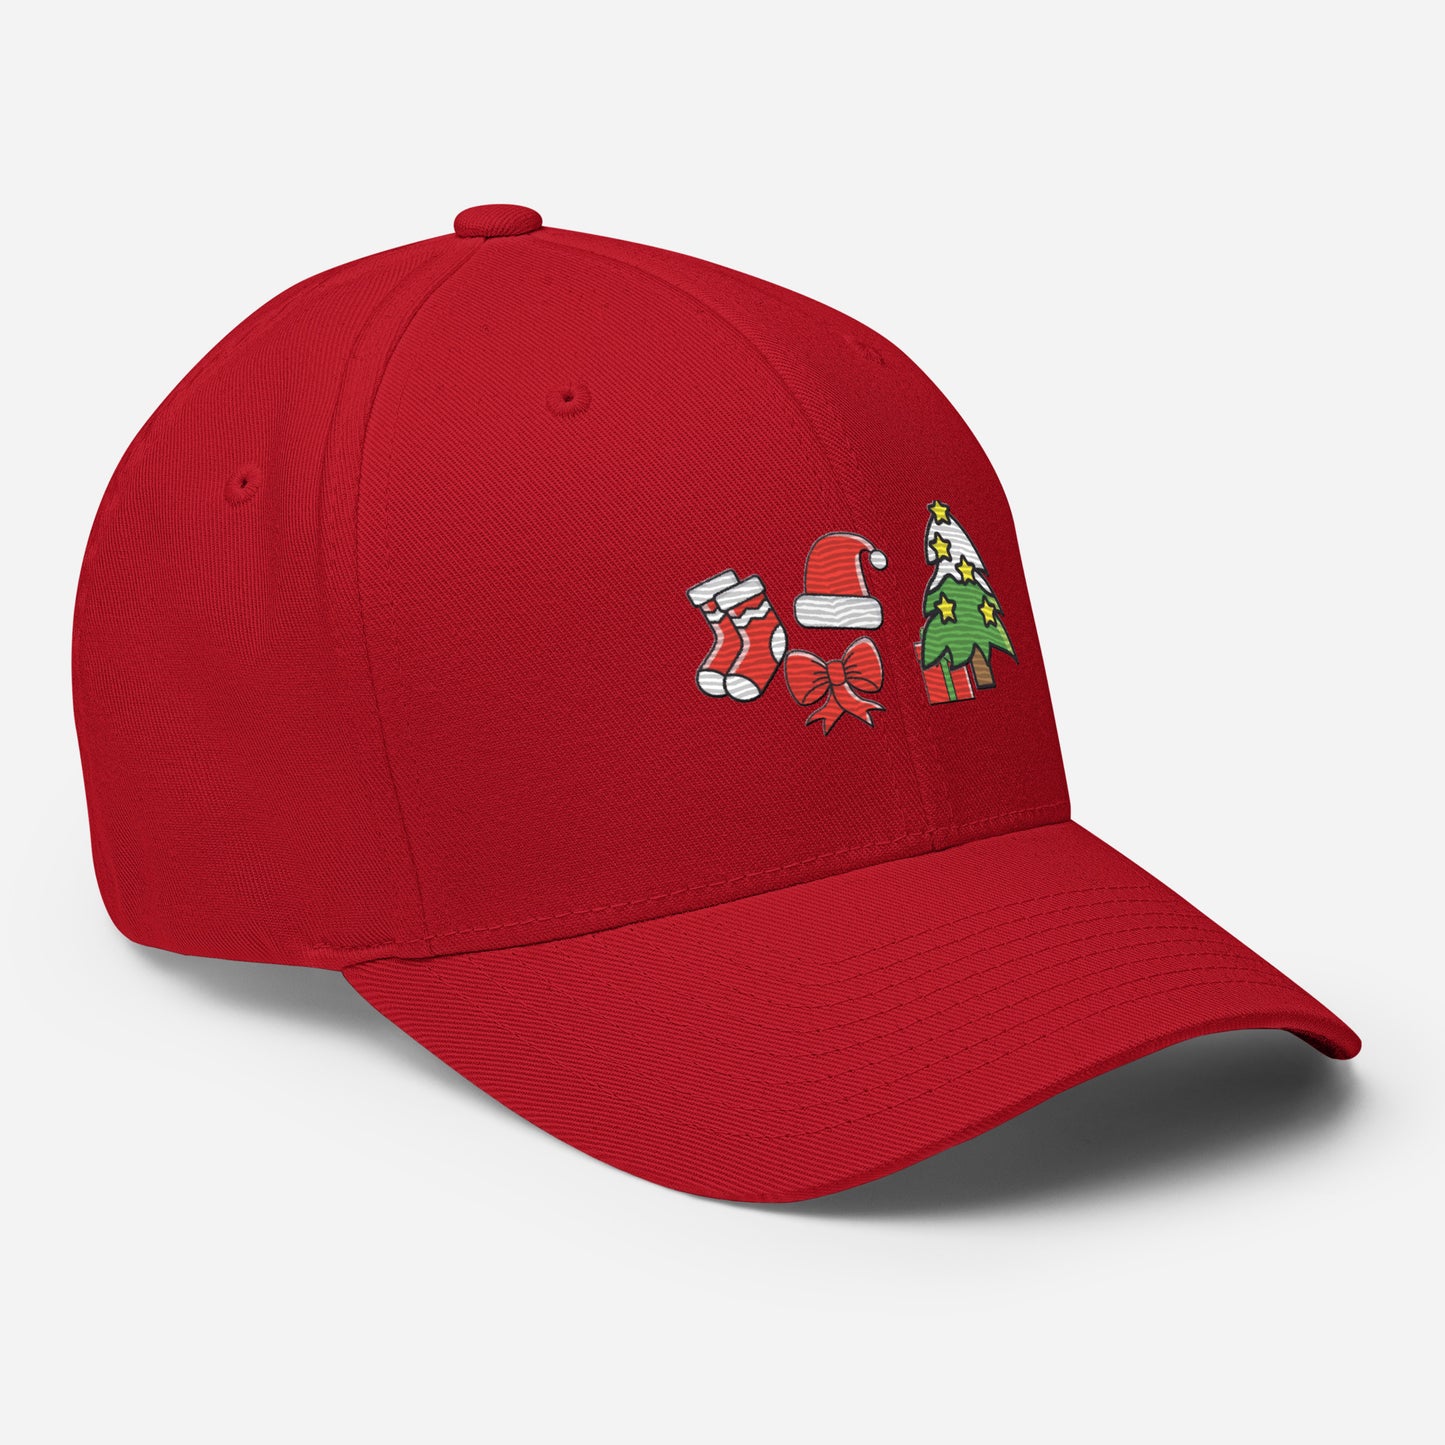 Baseball Cap with Christmas Madness Symbol